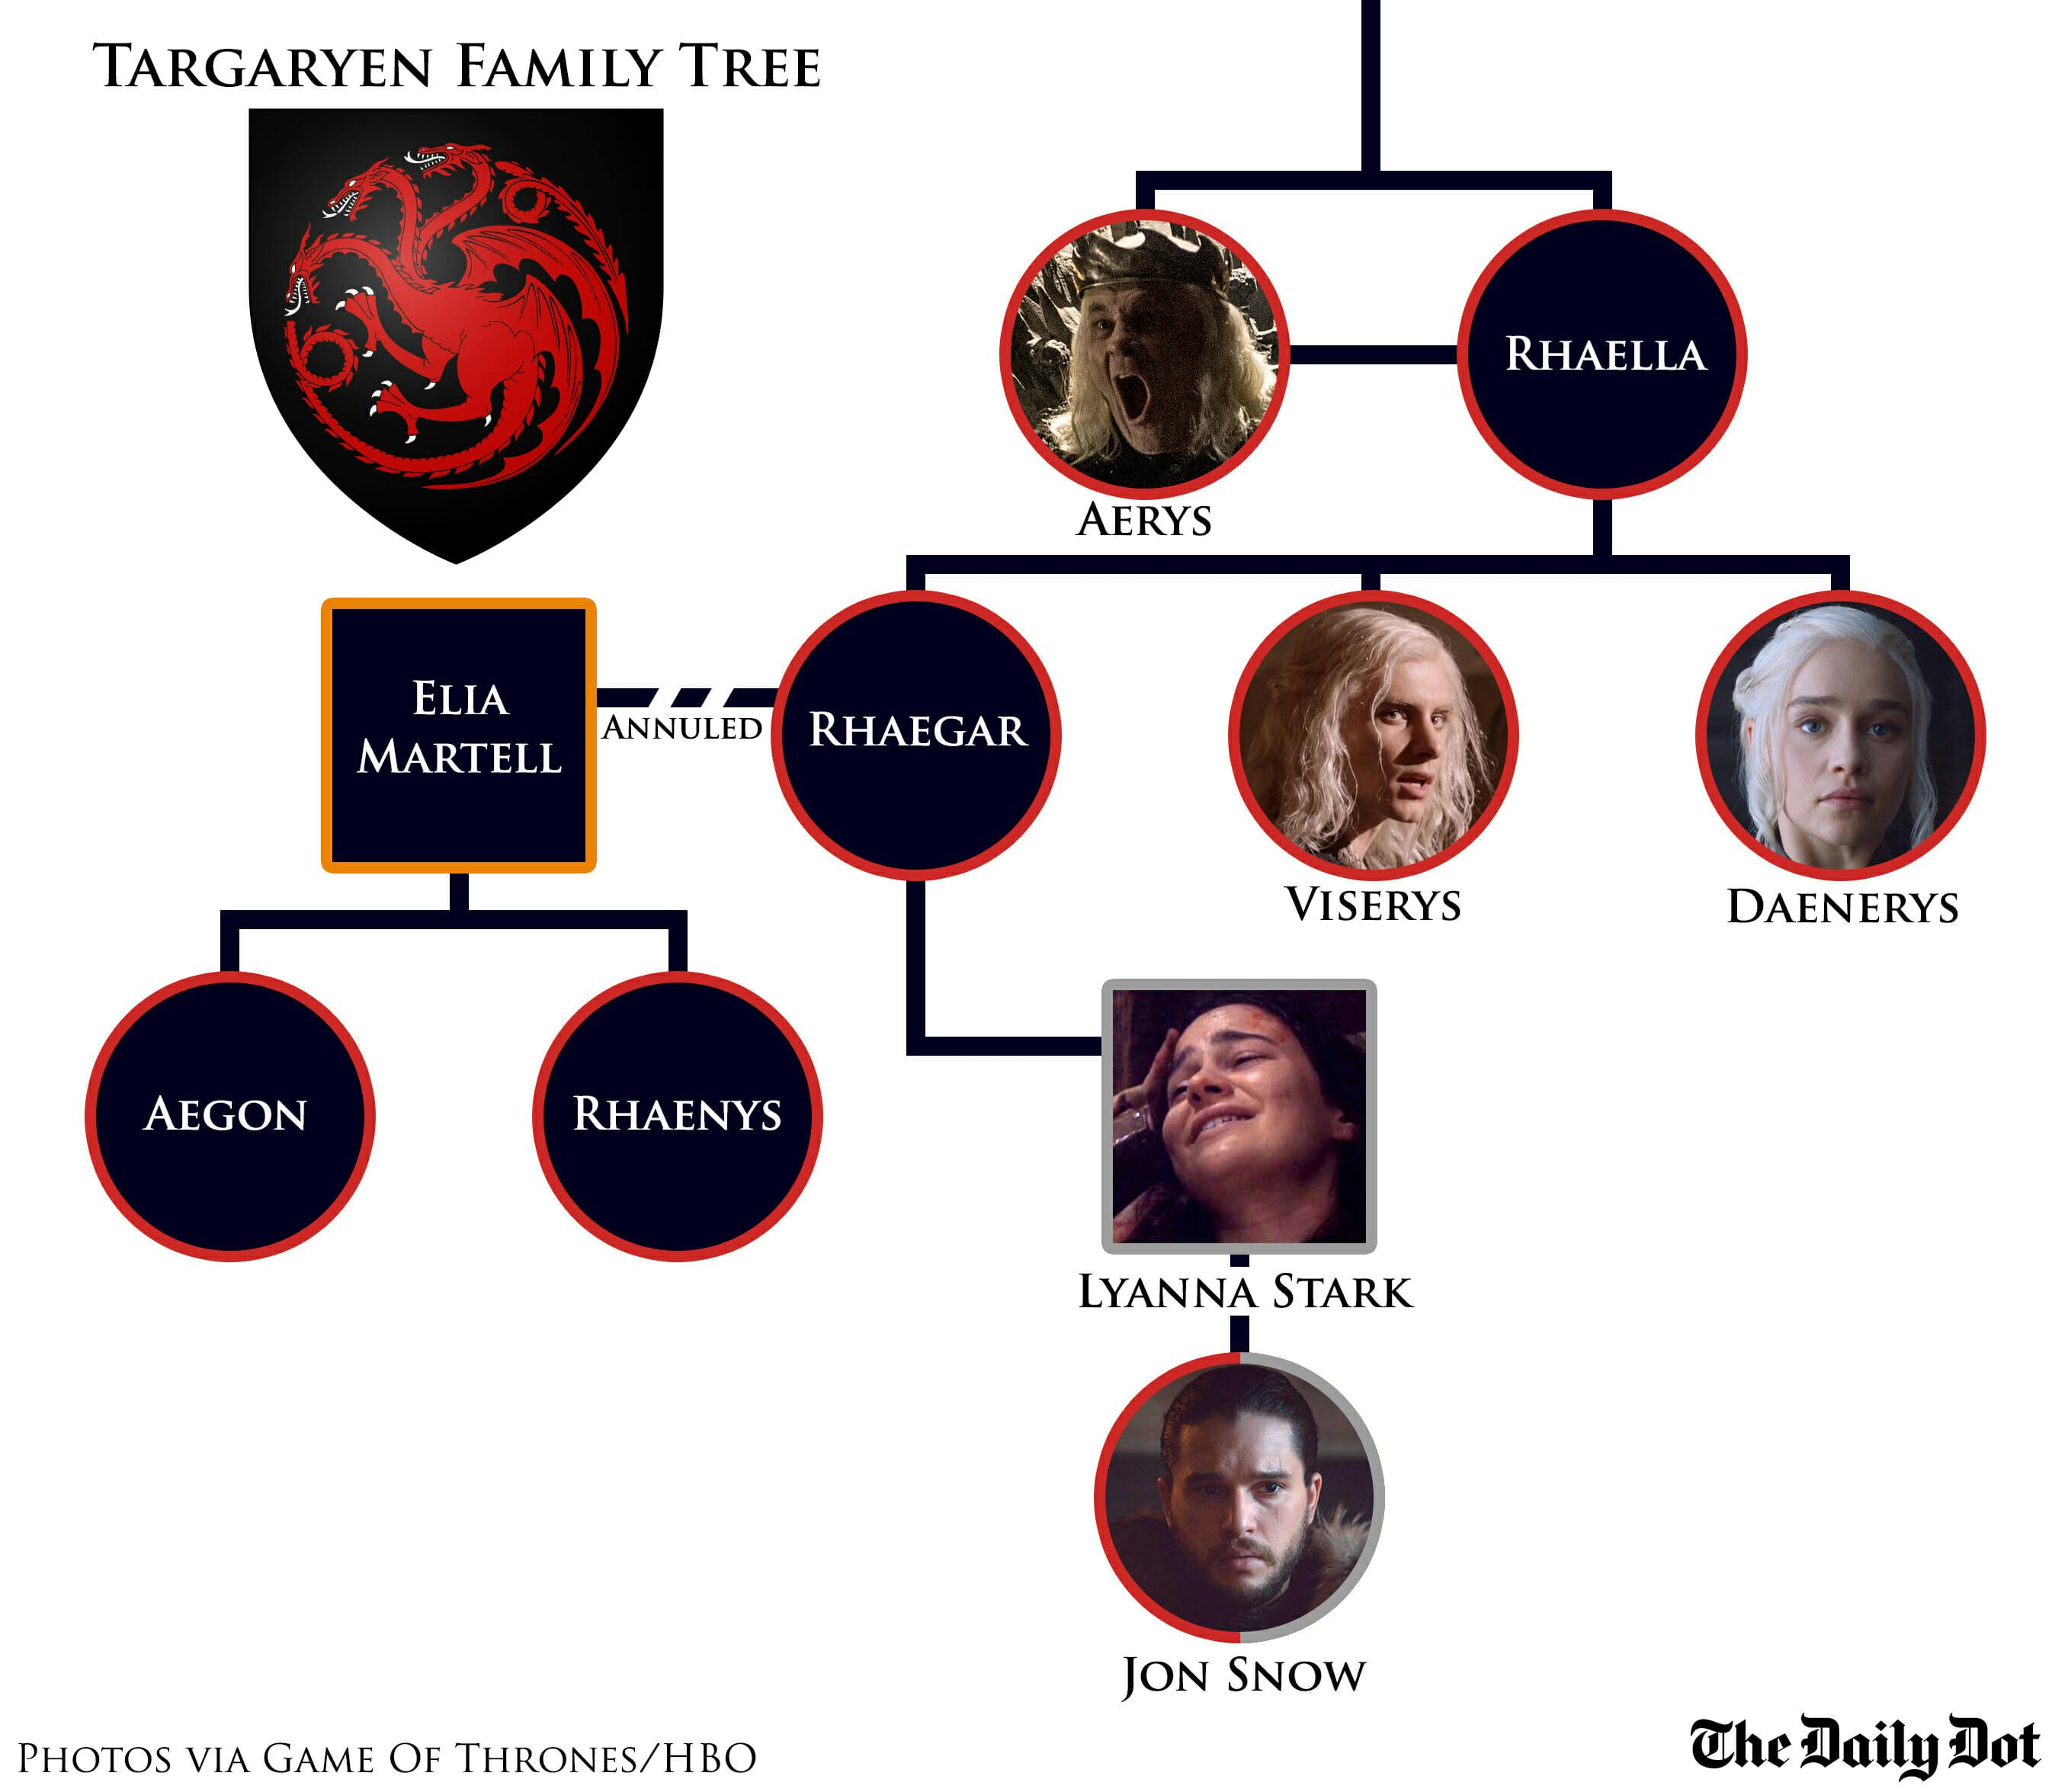 Targaryen family tree from Aerys to Jon Snow